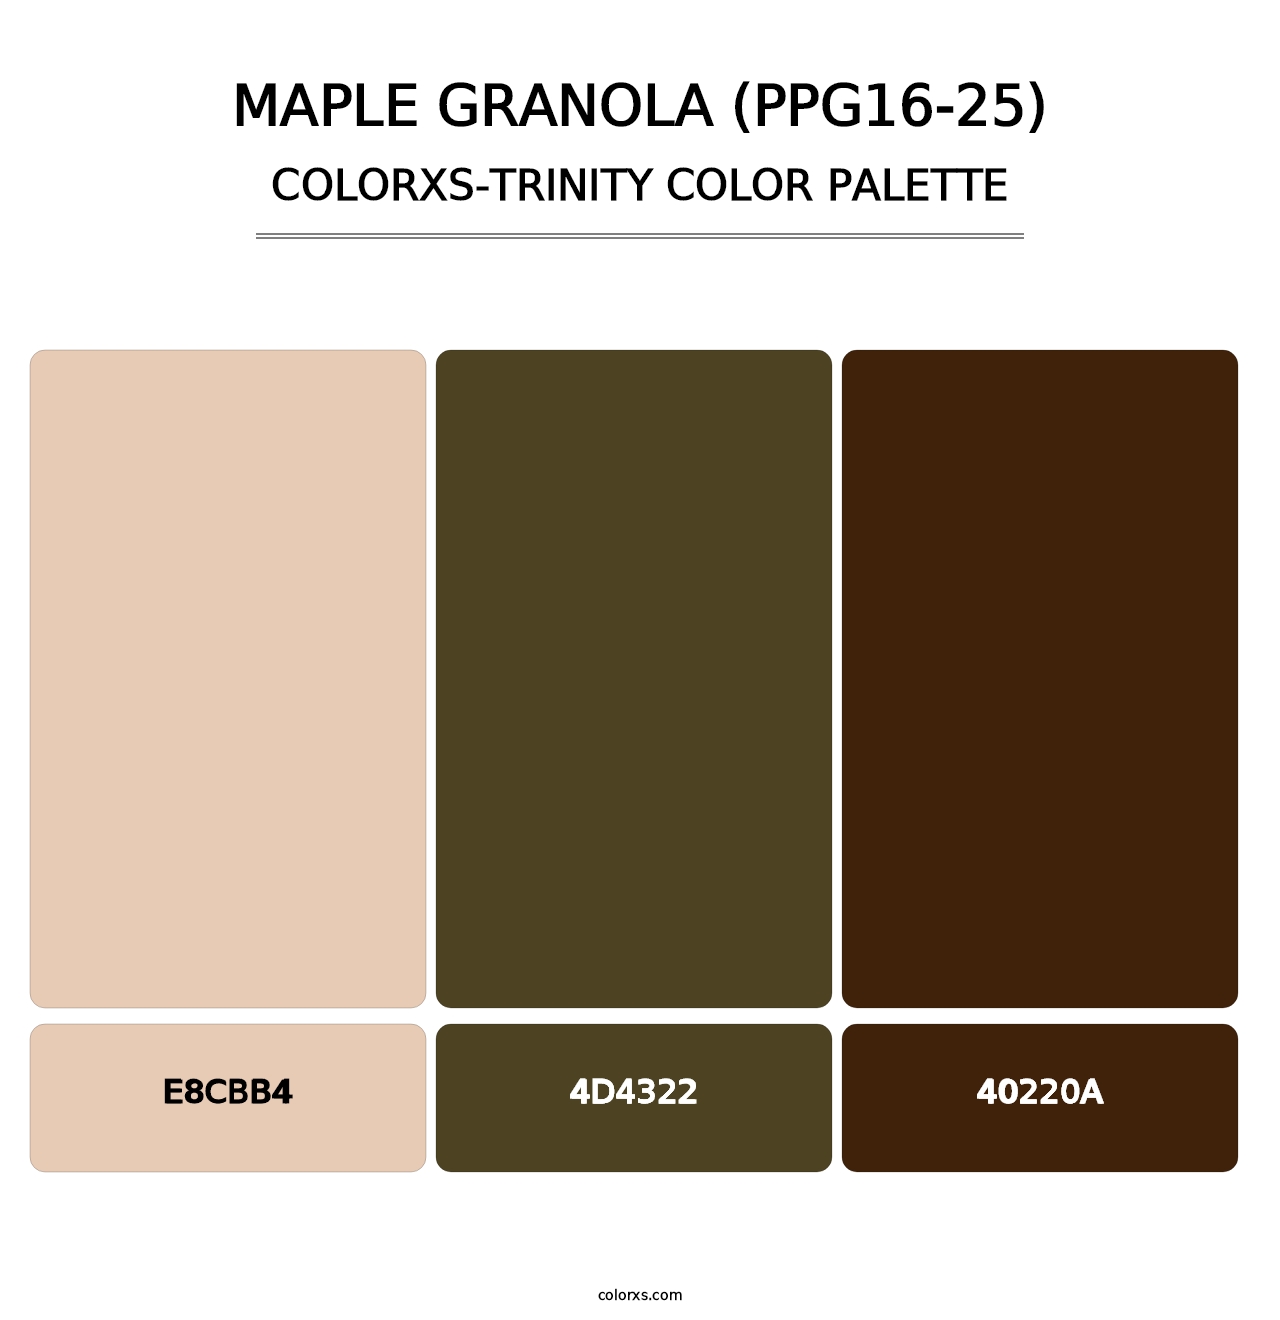 Maple Granola (PPG16-25) - Colorxs Trinity Palette